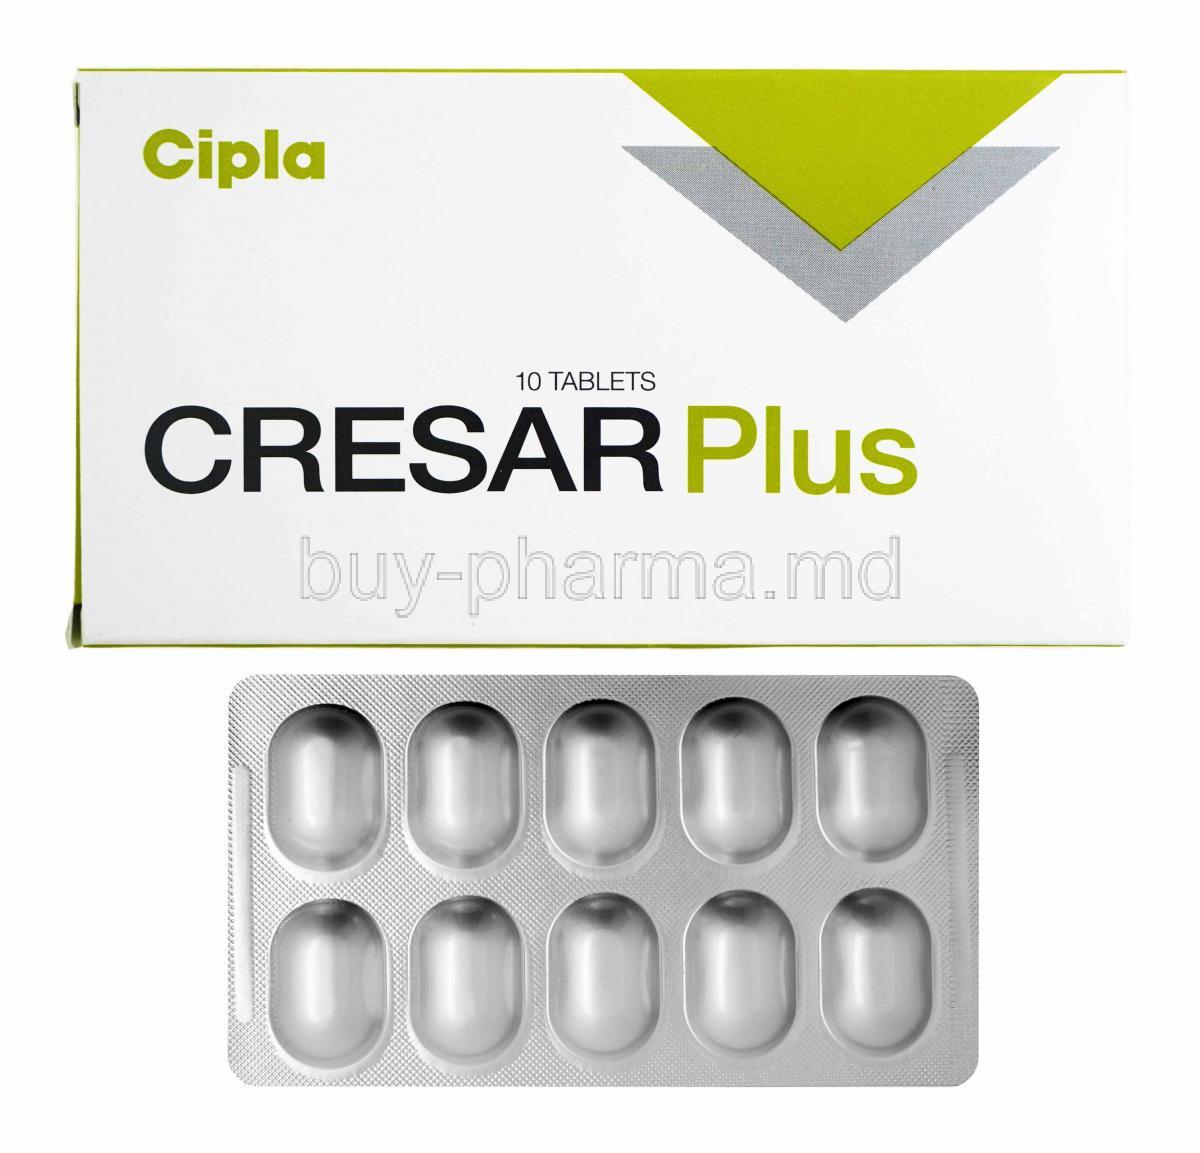 Cresar Plus, Telmisartan, Amlodipine and Hydrochlorothiazide box and tablets